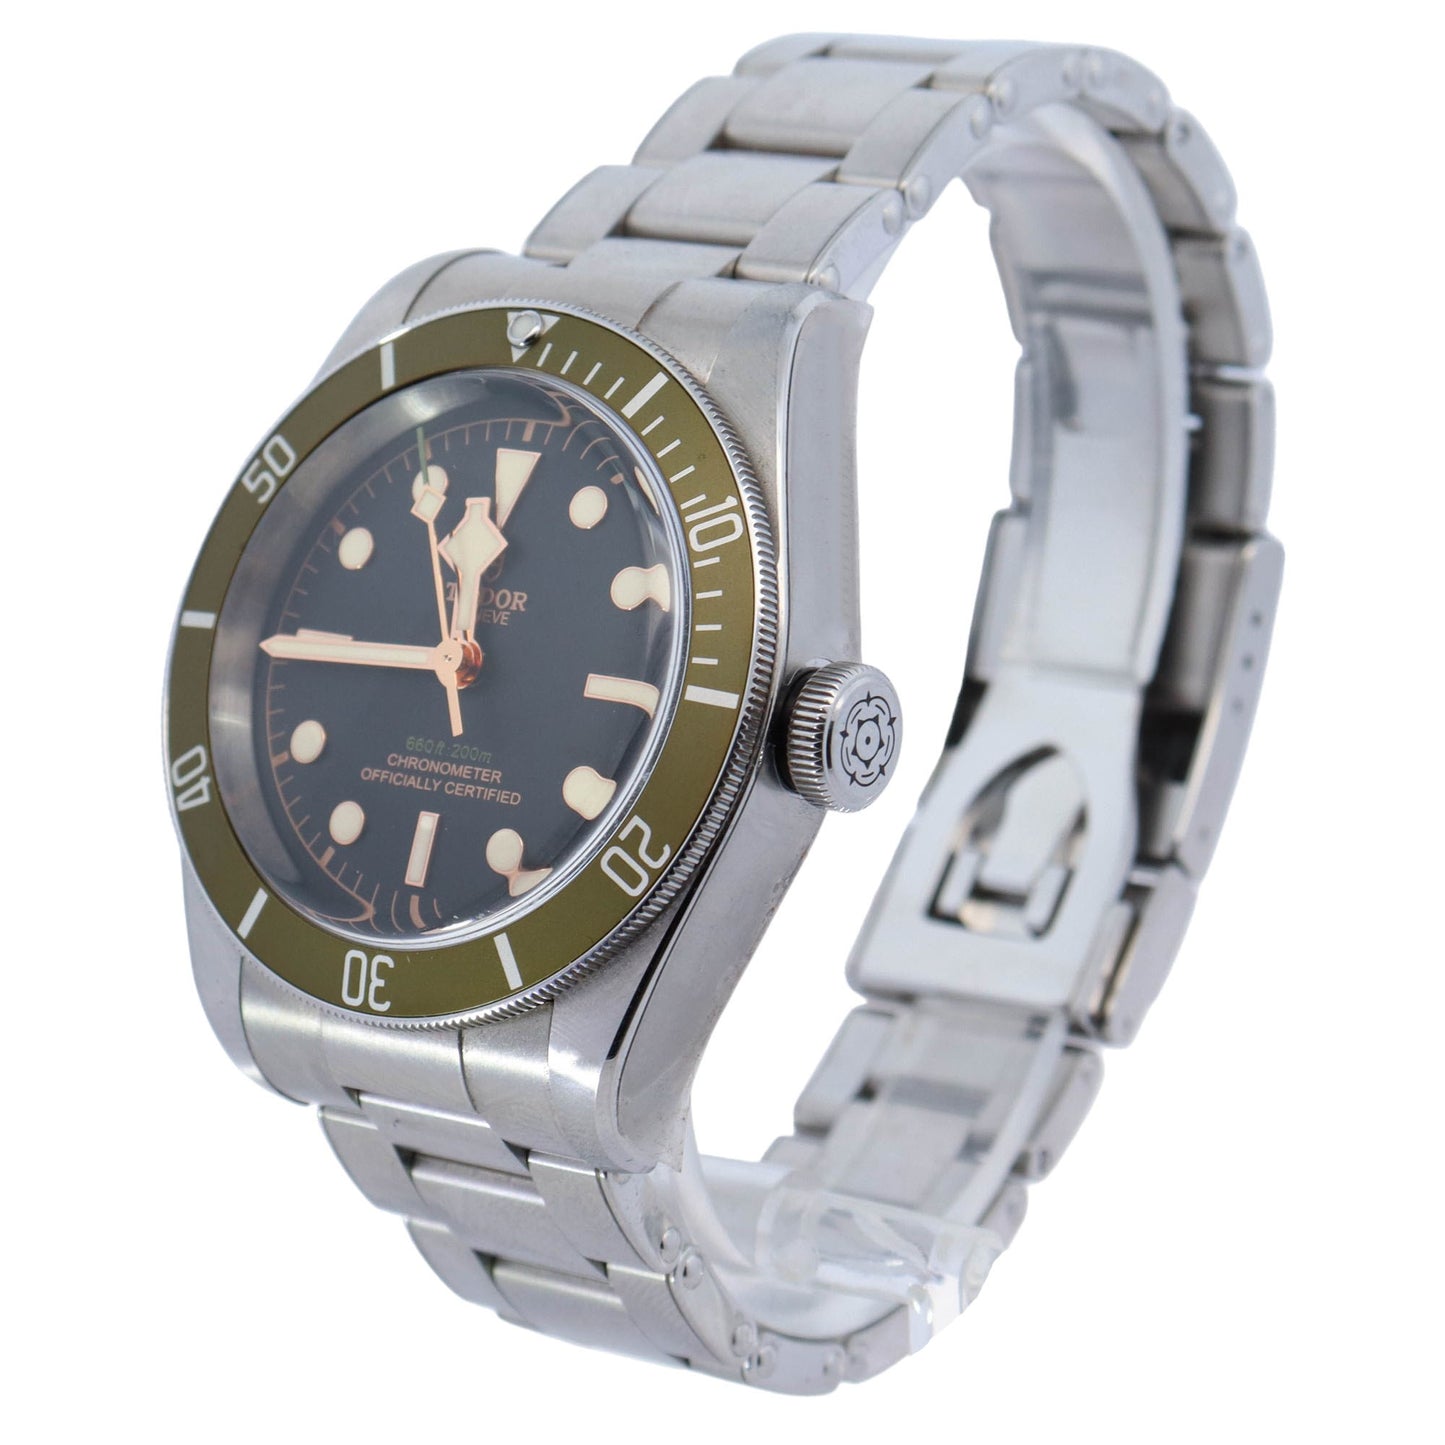 Tudor Black Bay Herritage Harrods Edition Stainless Steel 41mm Black Dot Dial Watch Reference# 79230G - Happy Jewelers Fine Jewelry Lifetime Warranty